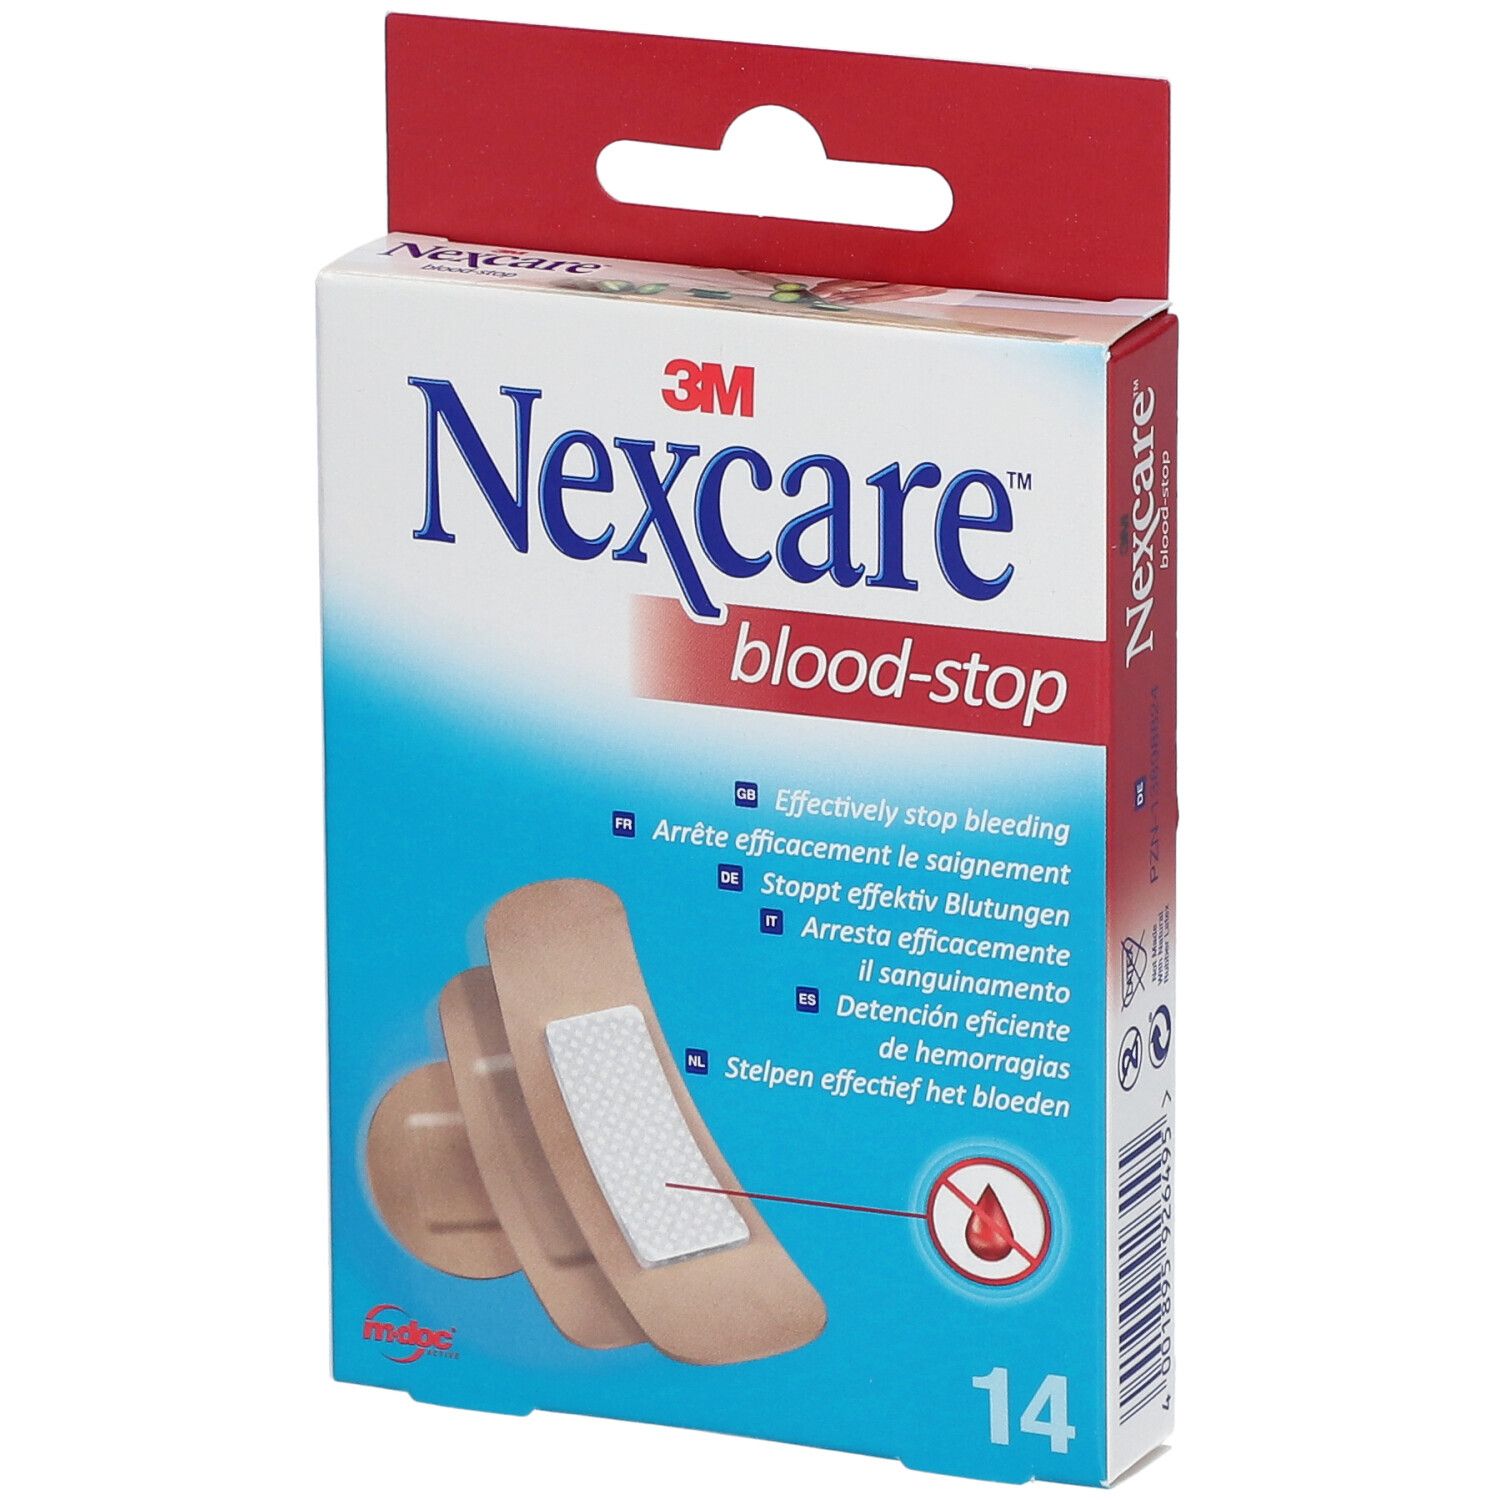 Nexcare™ blood-stop